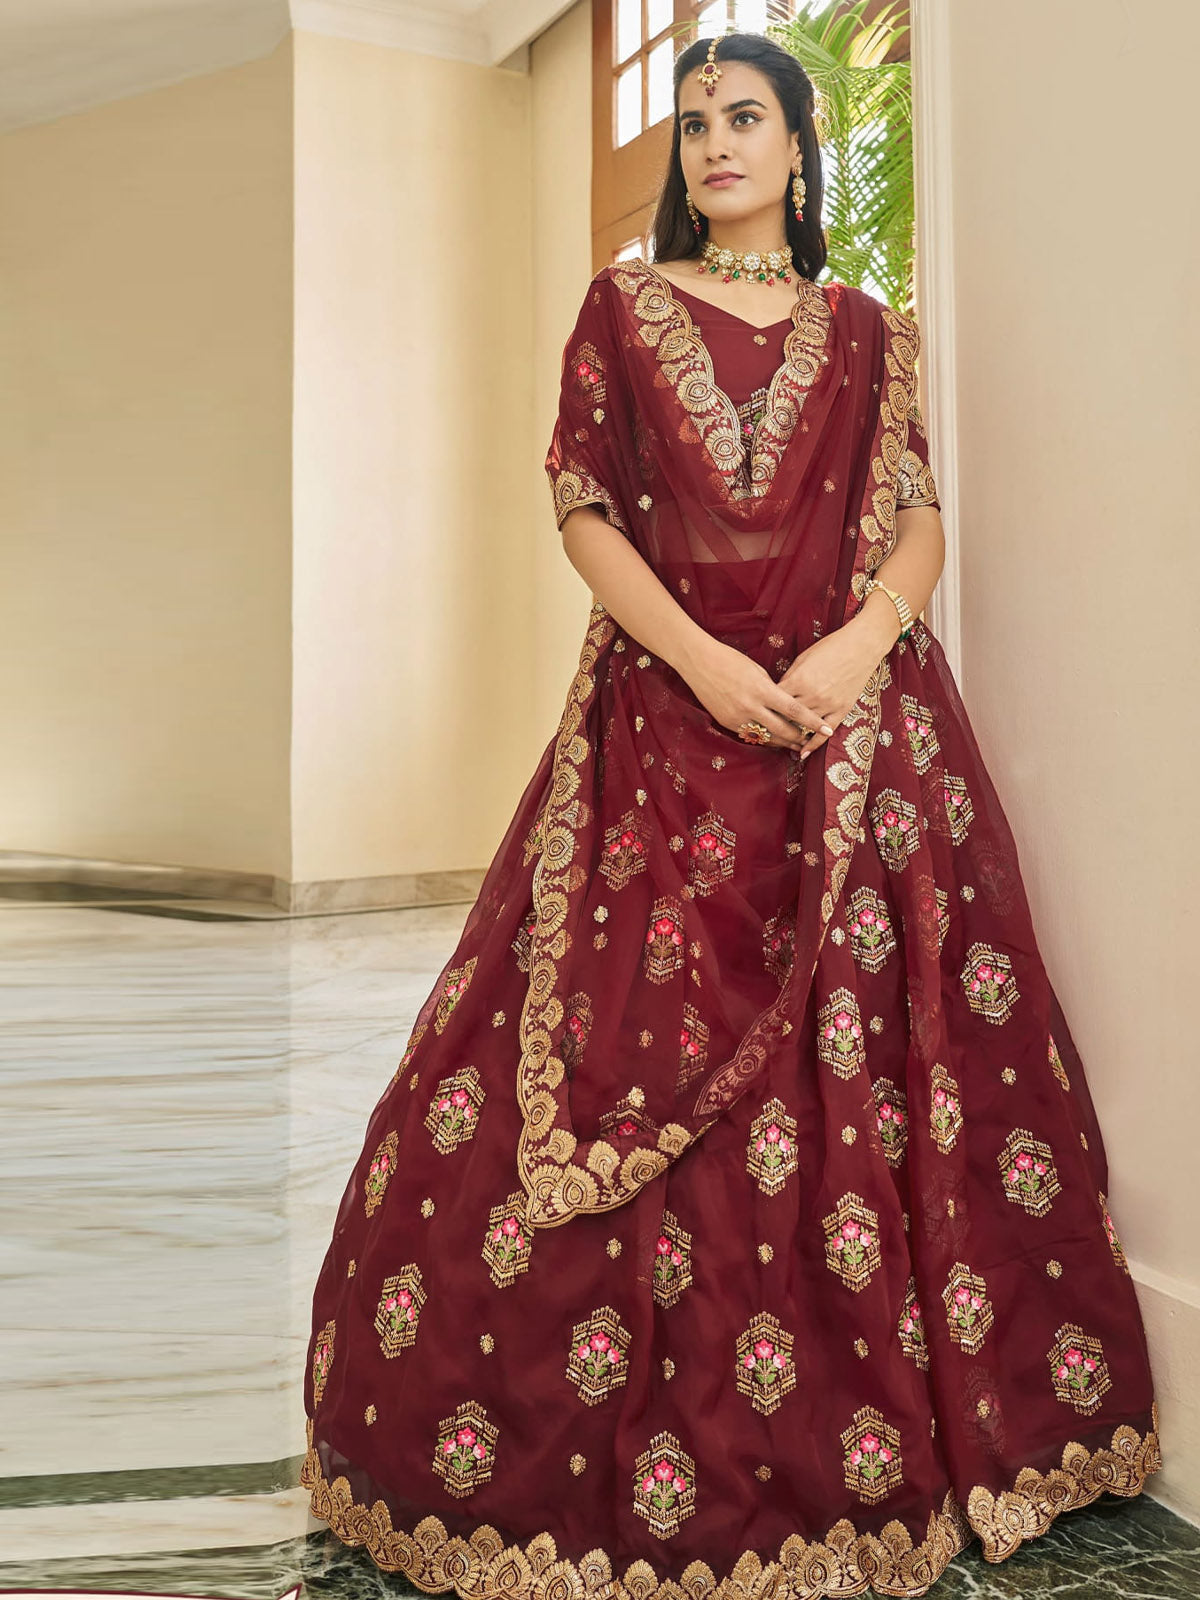 Red Maroon Bridal Lehenga Choli Indian Ethnic Wedding Lengha Chunri Lahanga  Net | eBay